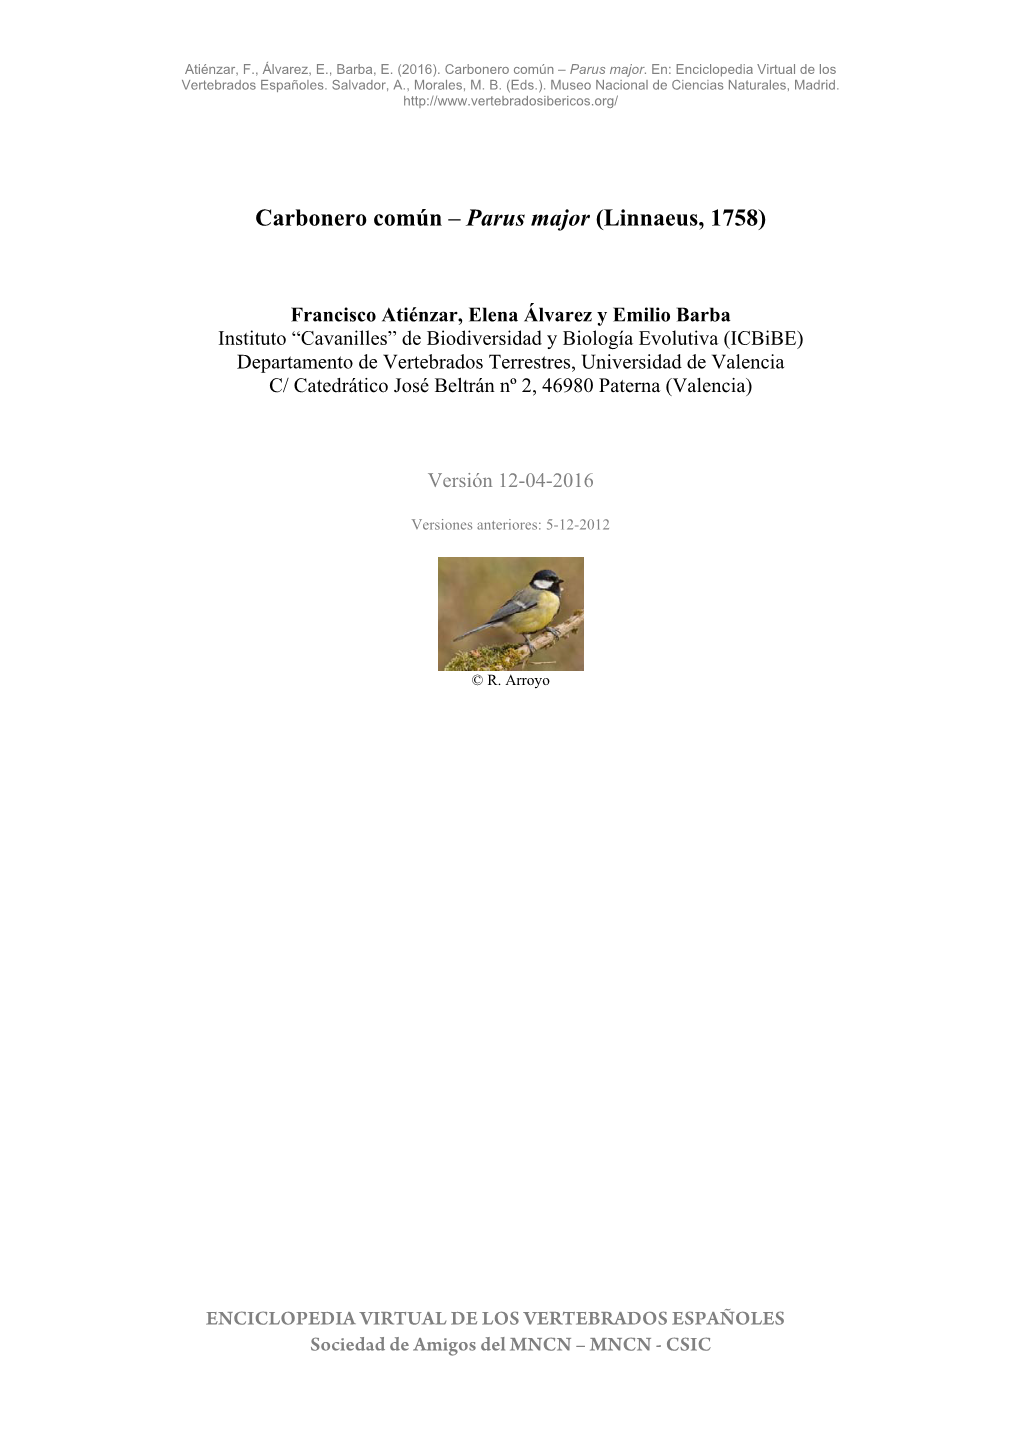 Carbonero Común – Parus Major (Linnaeus, 1758)